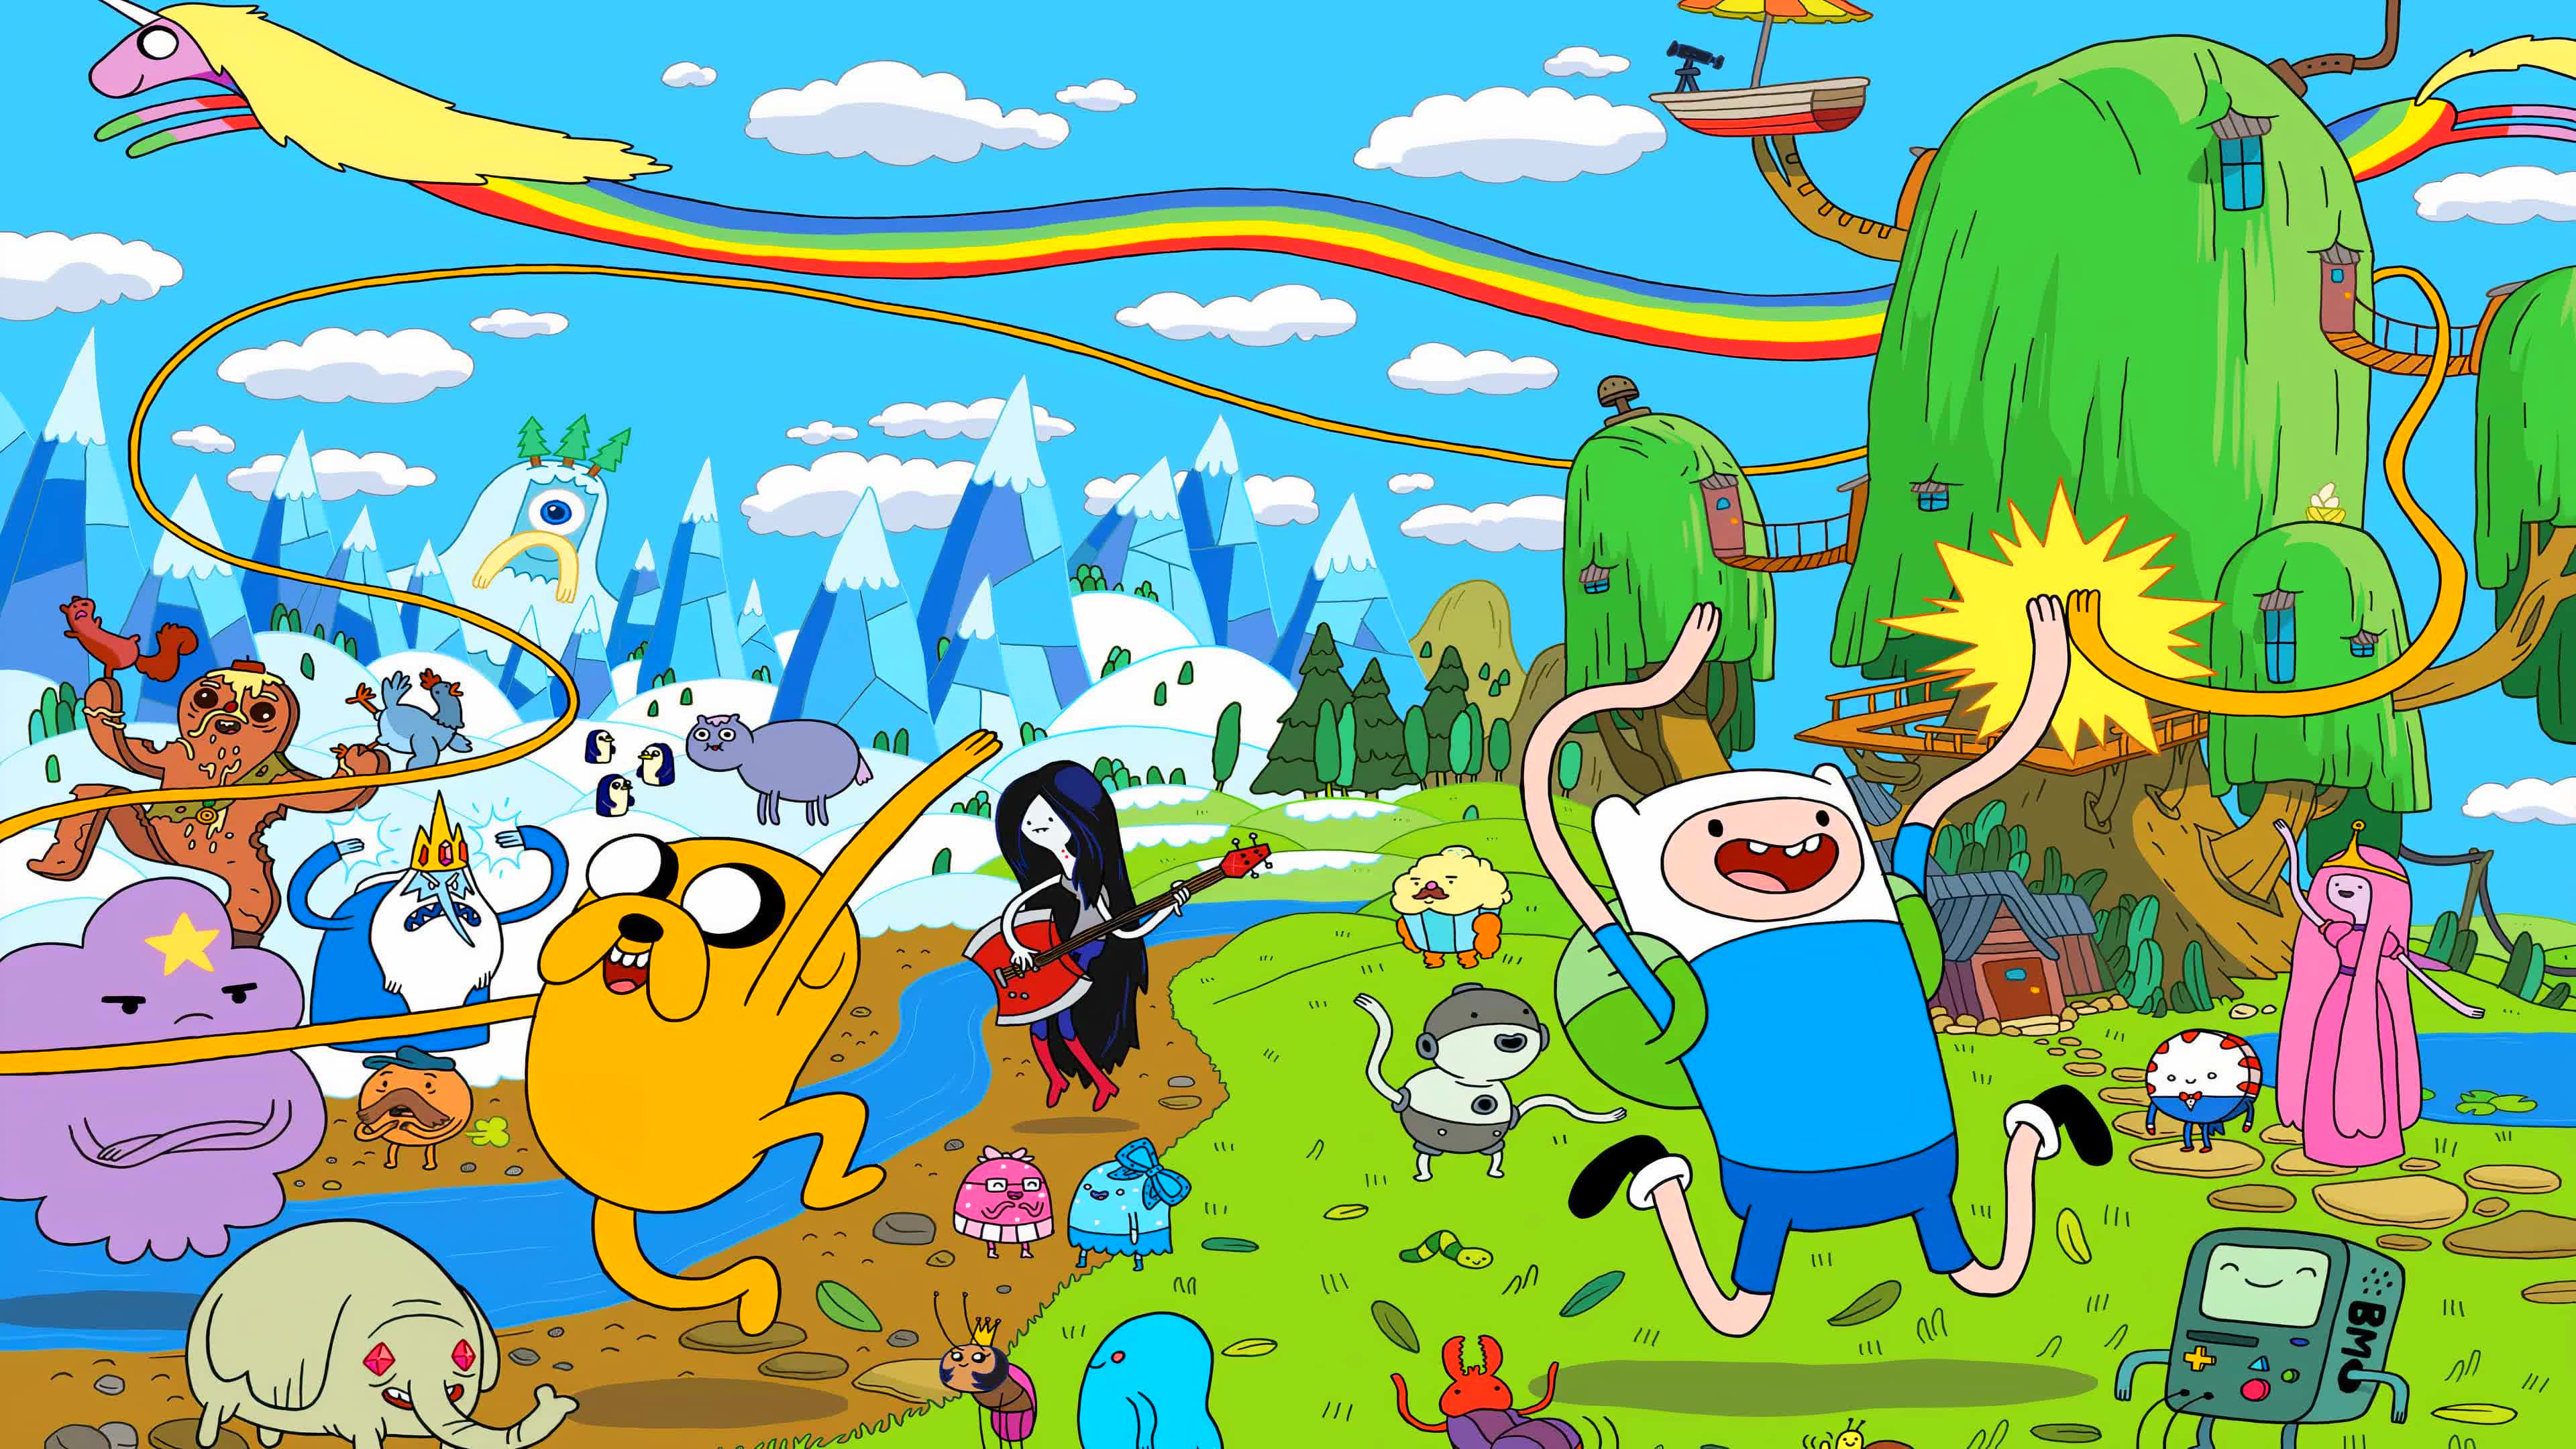 Adventure Time Season 2 (2011)